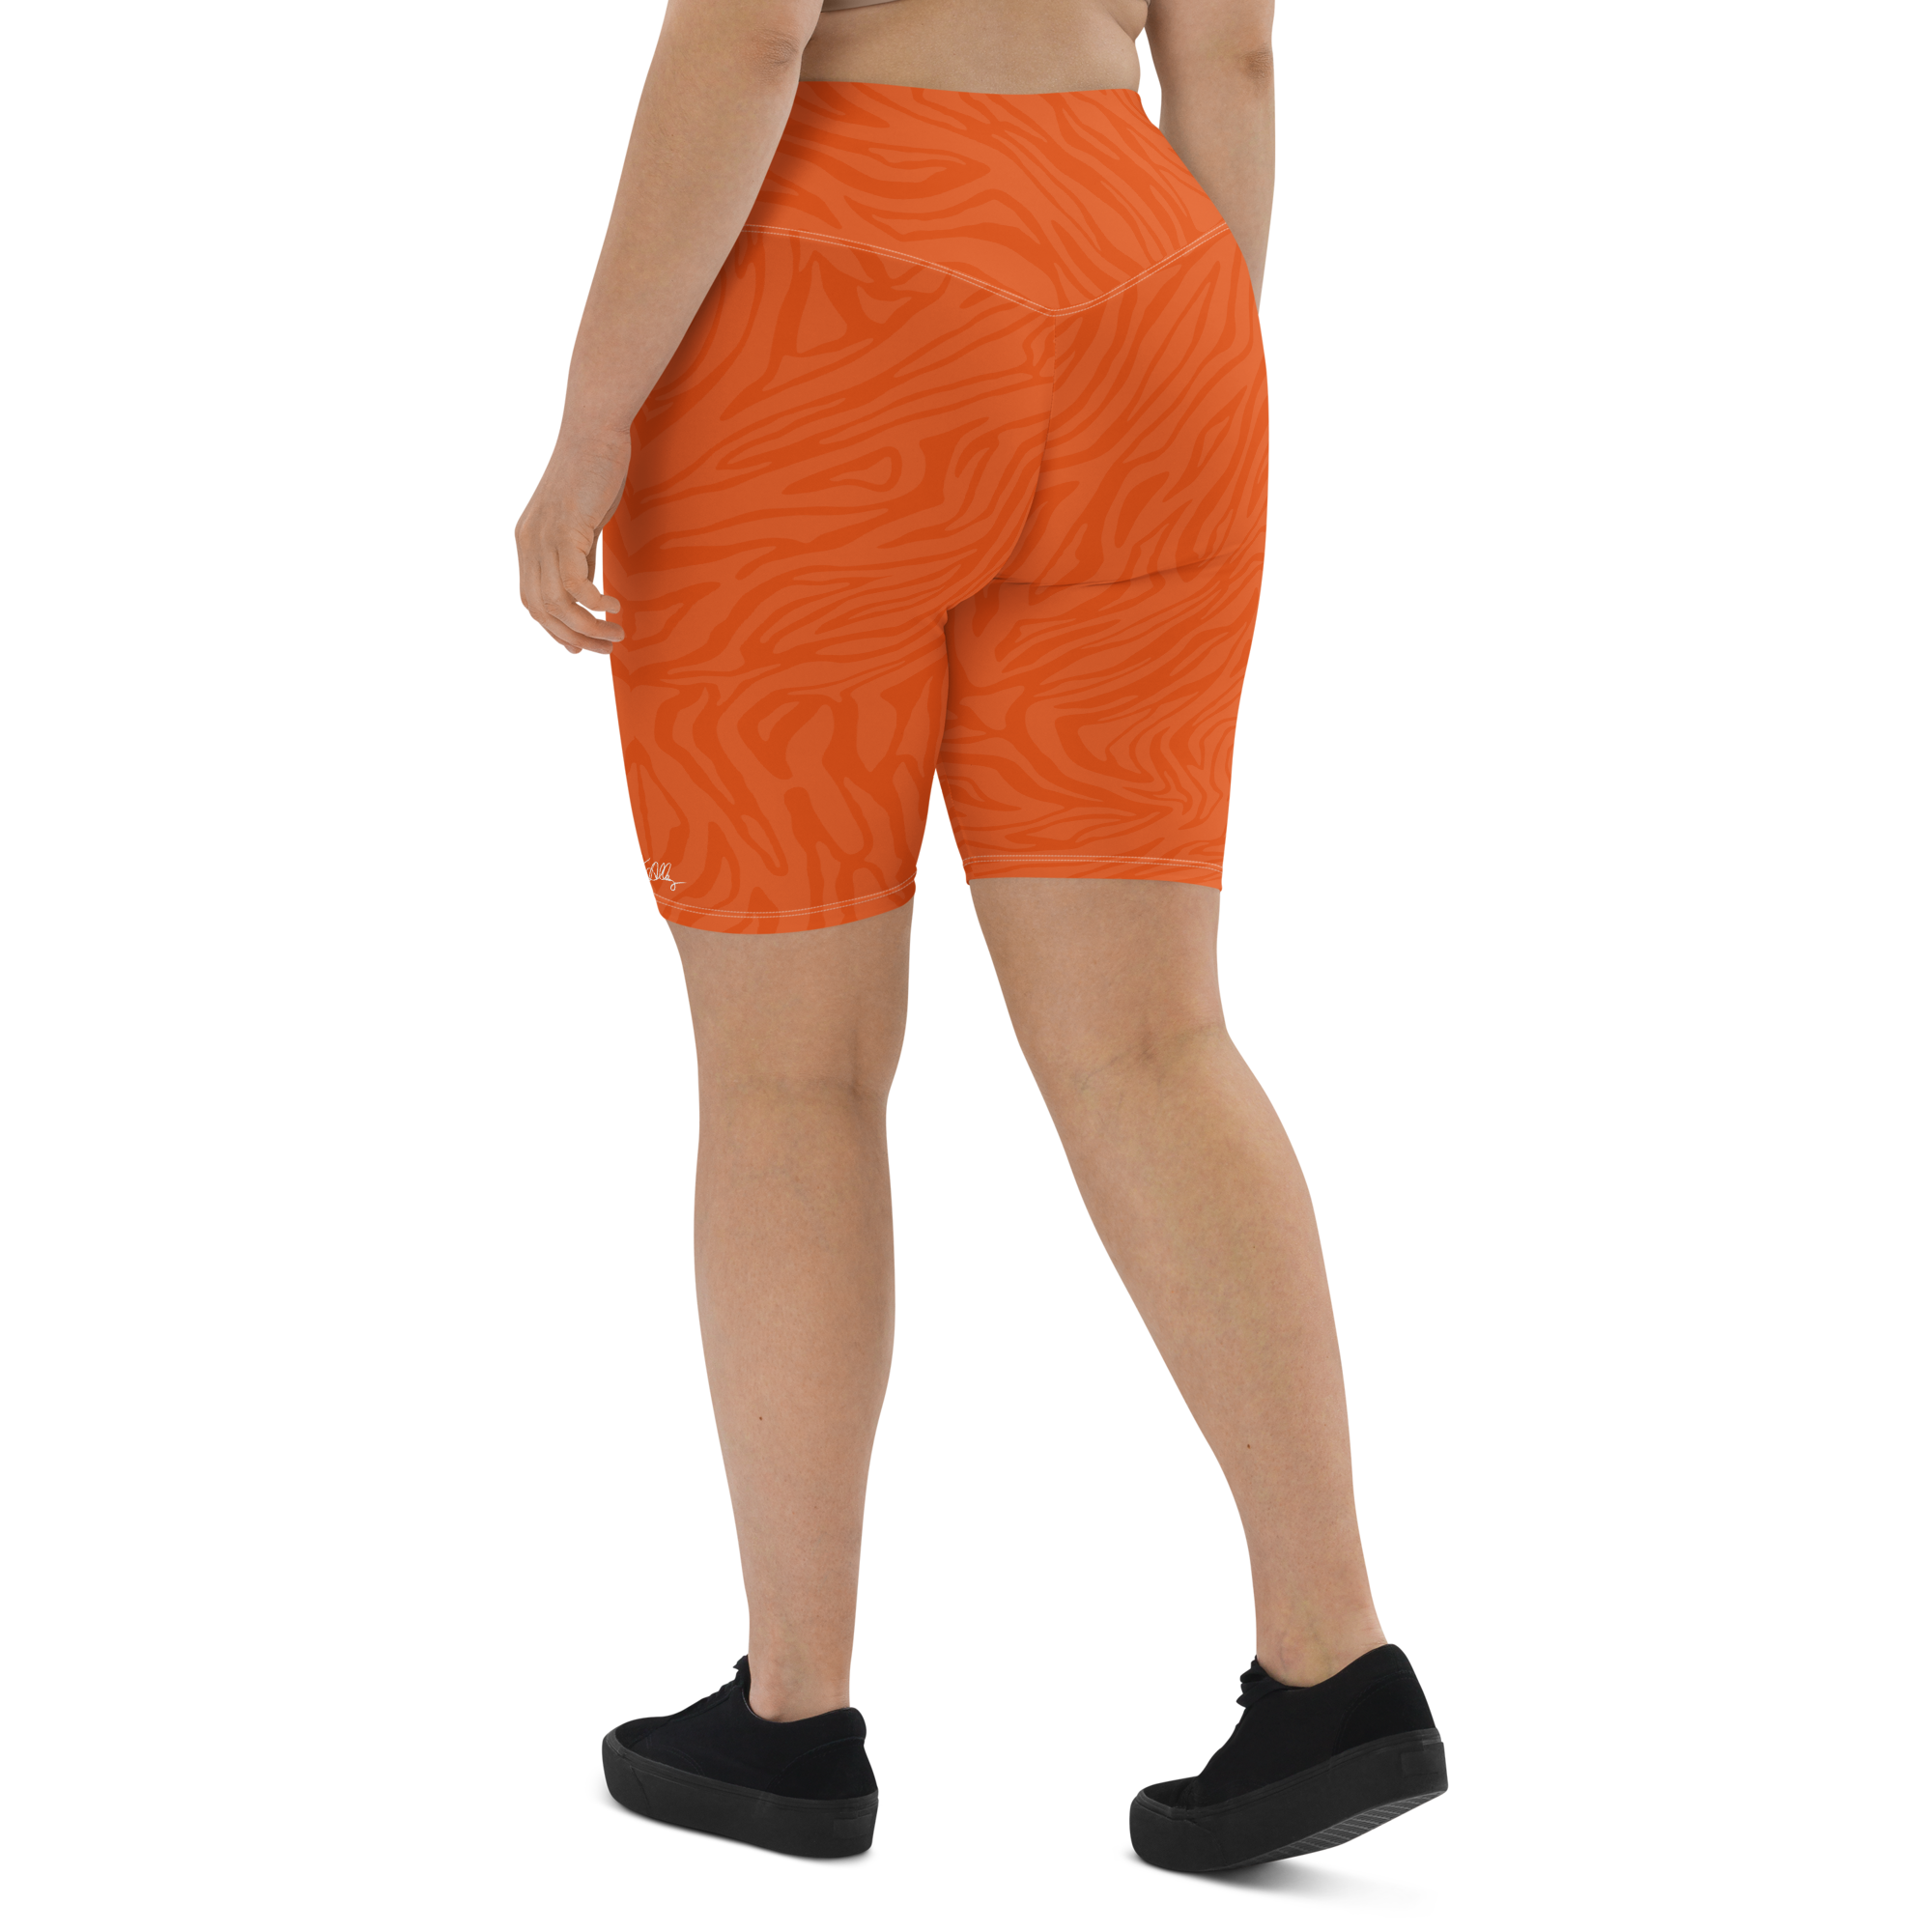 Shades of Orange Biker Shorts